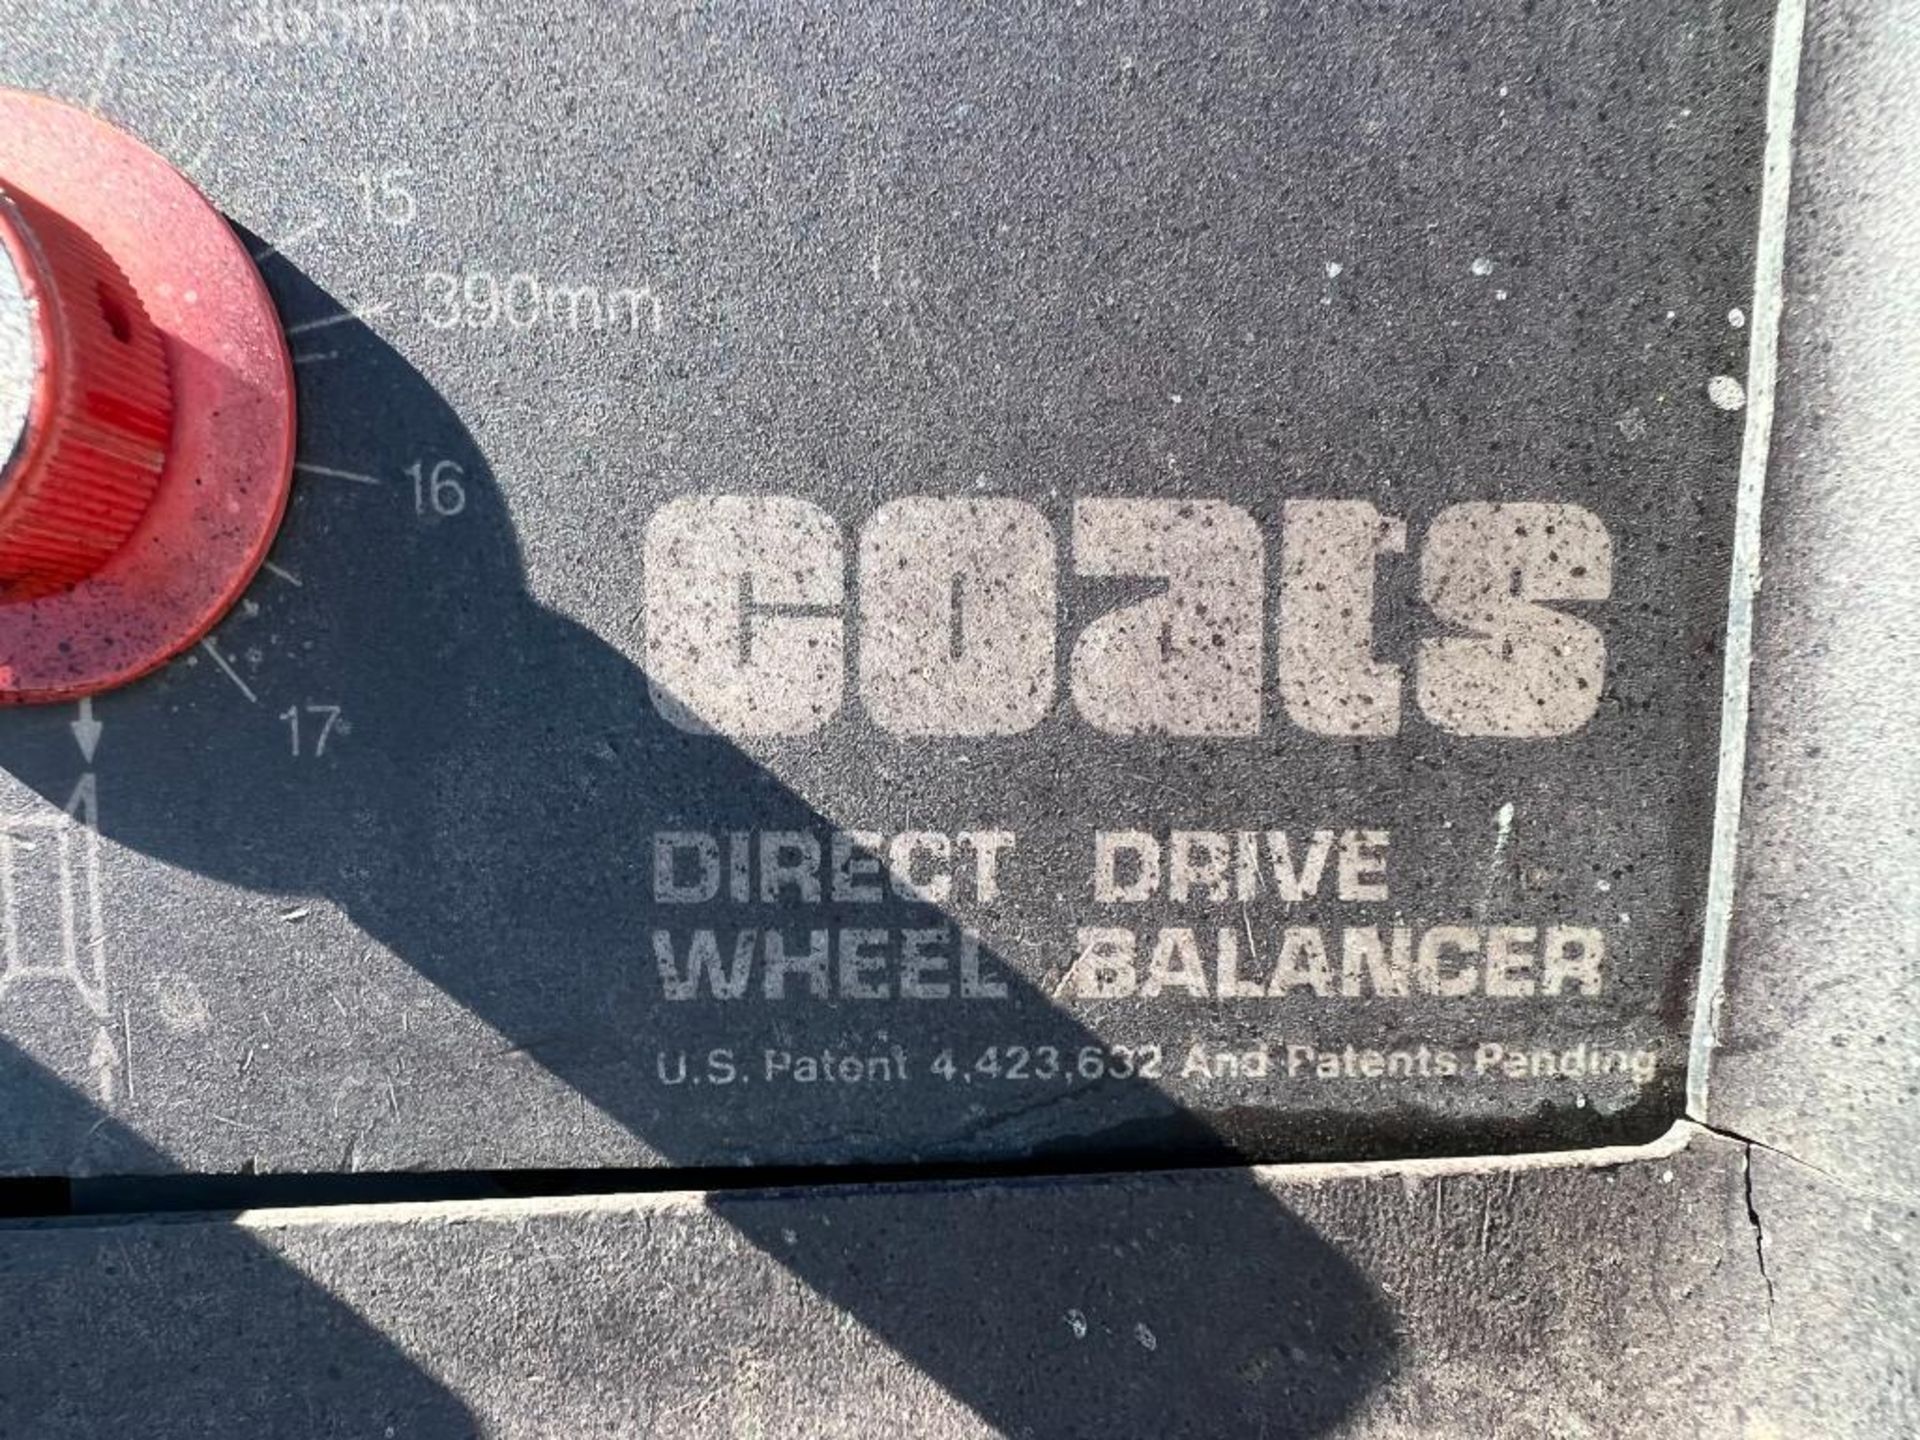 Coats Direct Drive Wheel Balancer, Part #8642117, Serial #07922459229, Volts 115, Amps 15, HZ 50/60 - Image 2 of 8